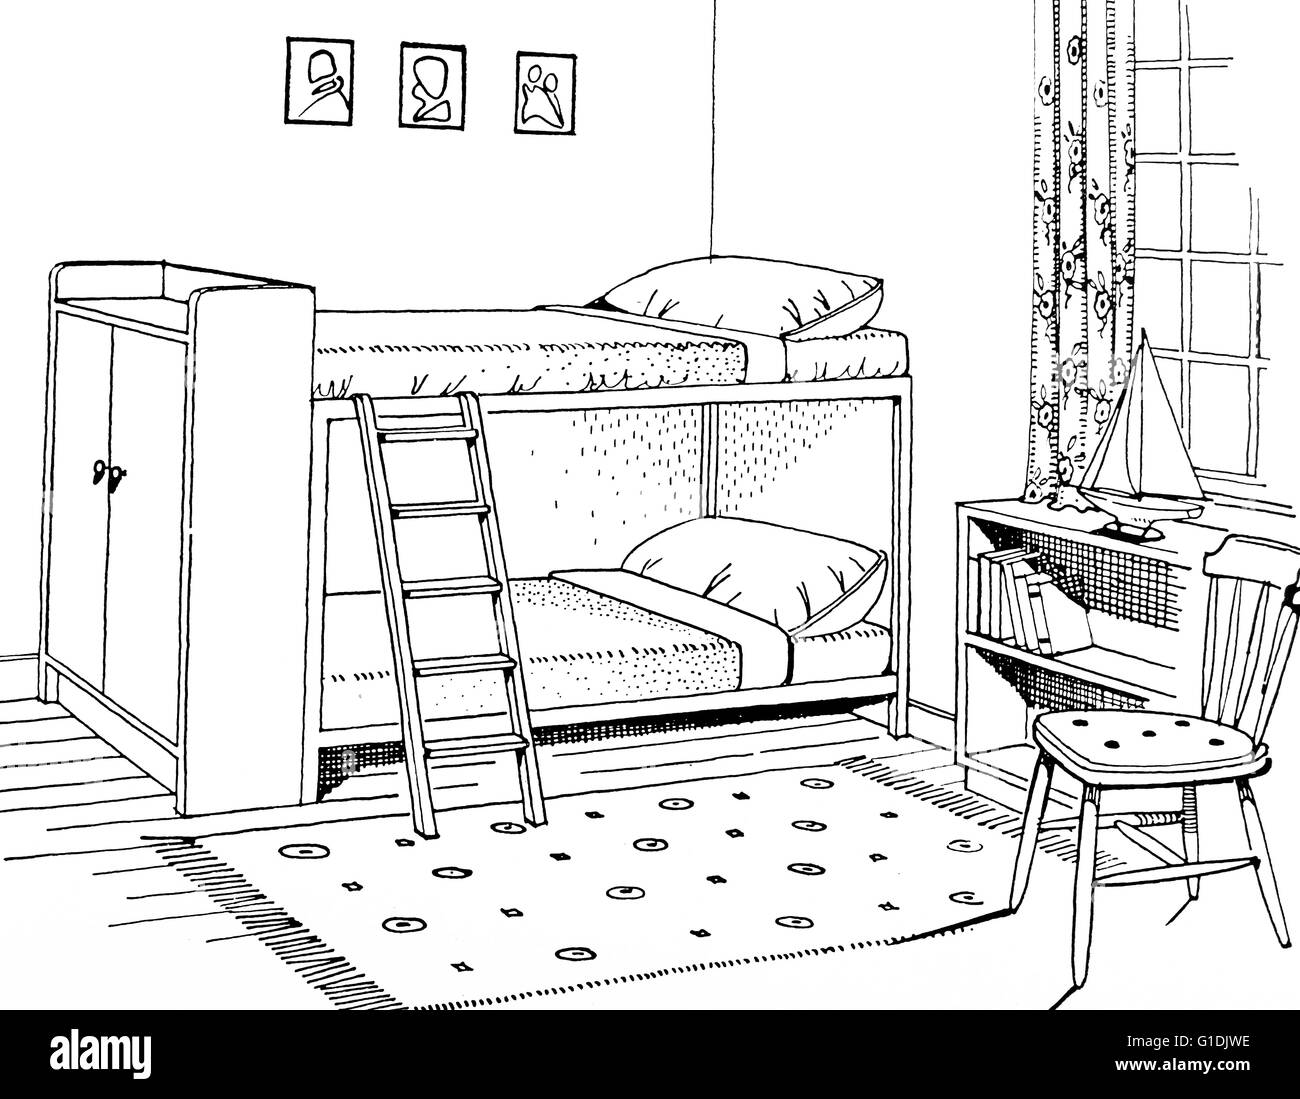 Interior Design Bedroom Black And White Stock Photos